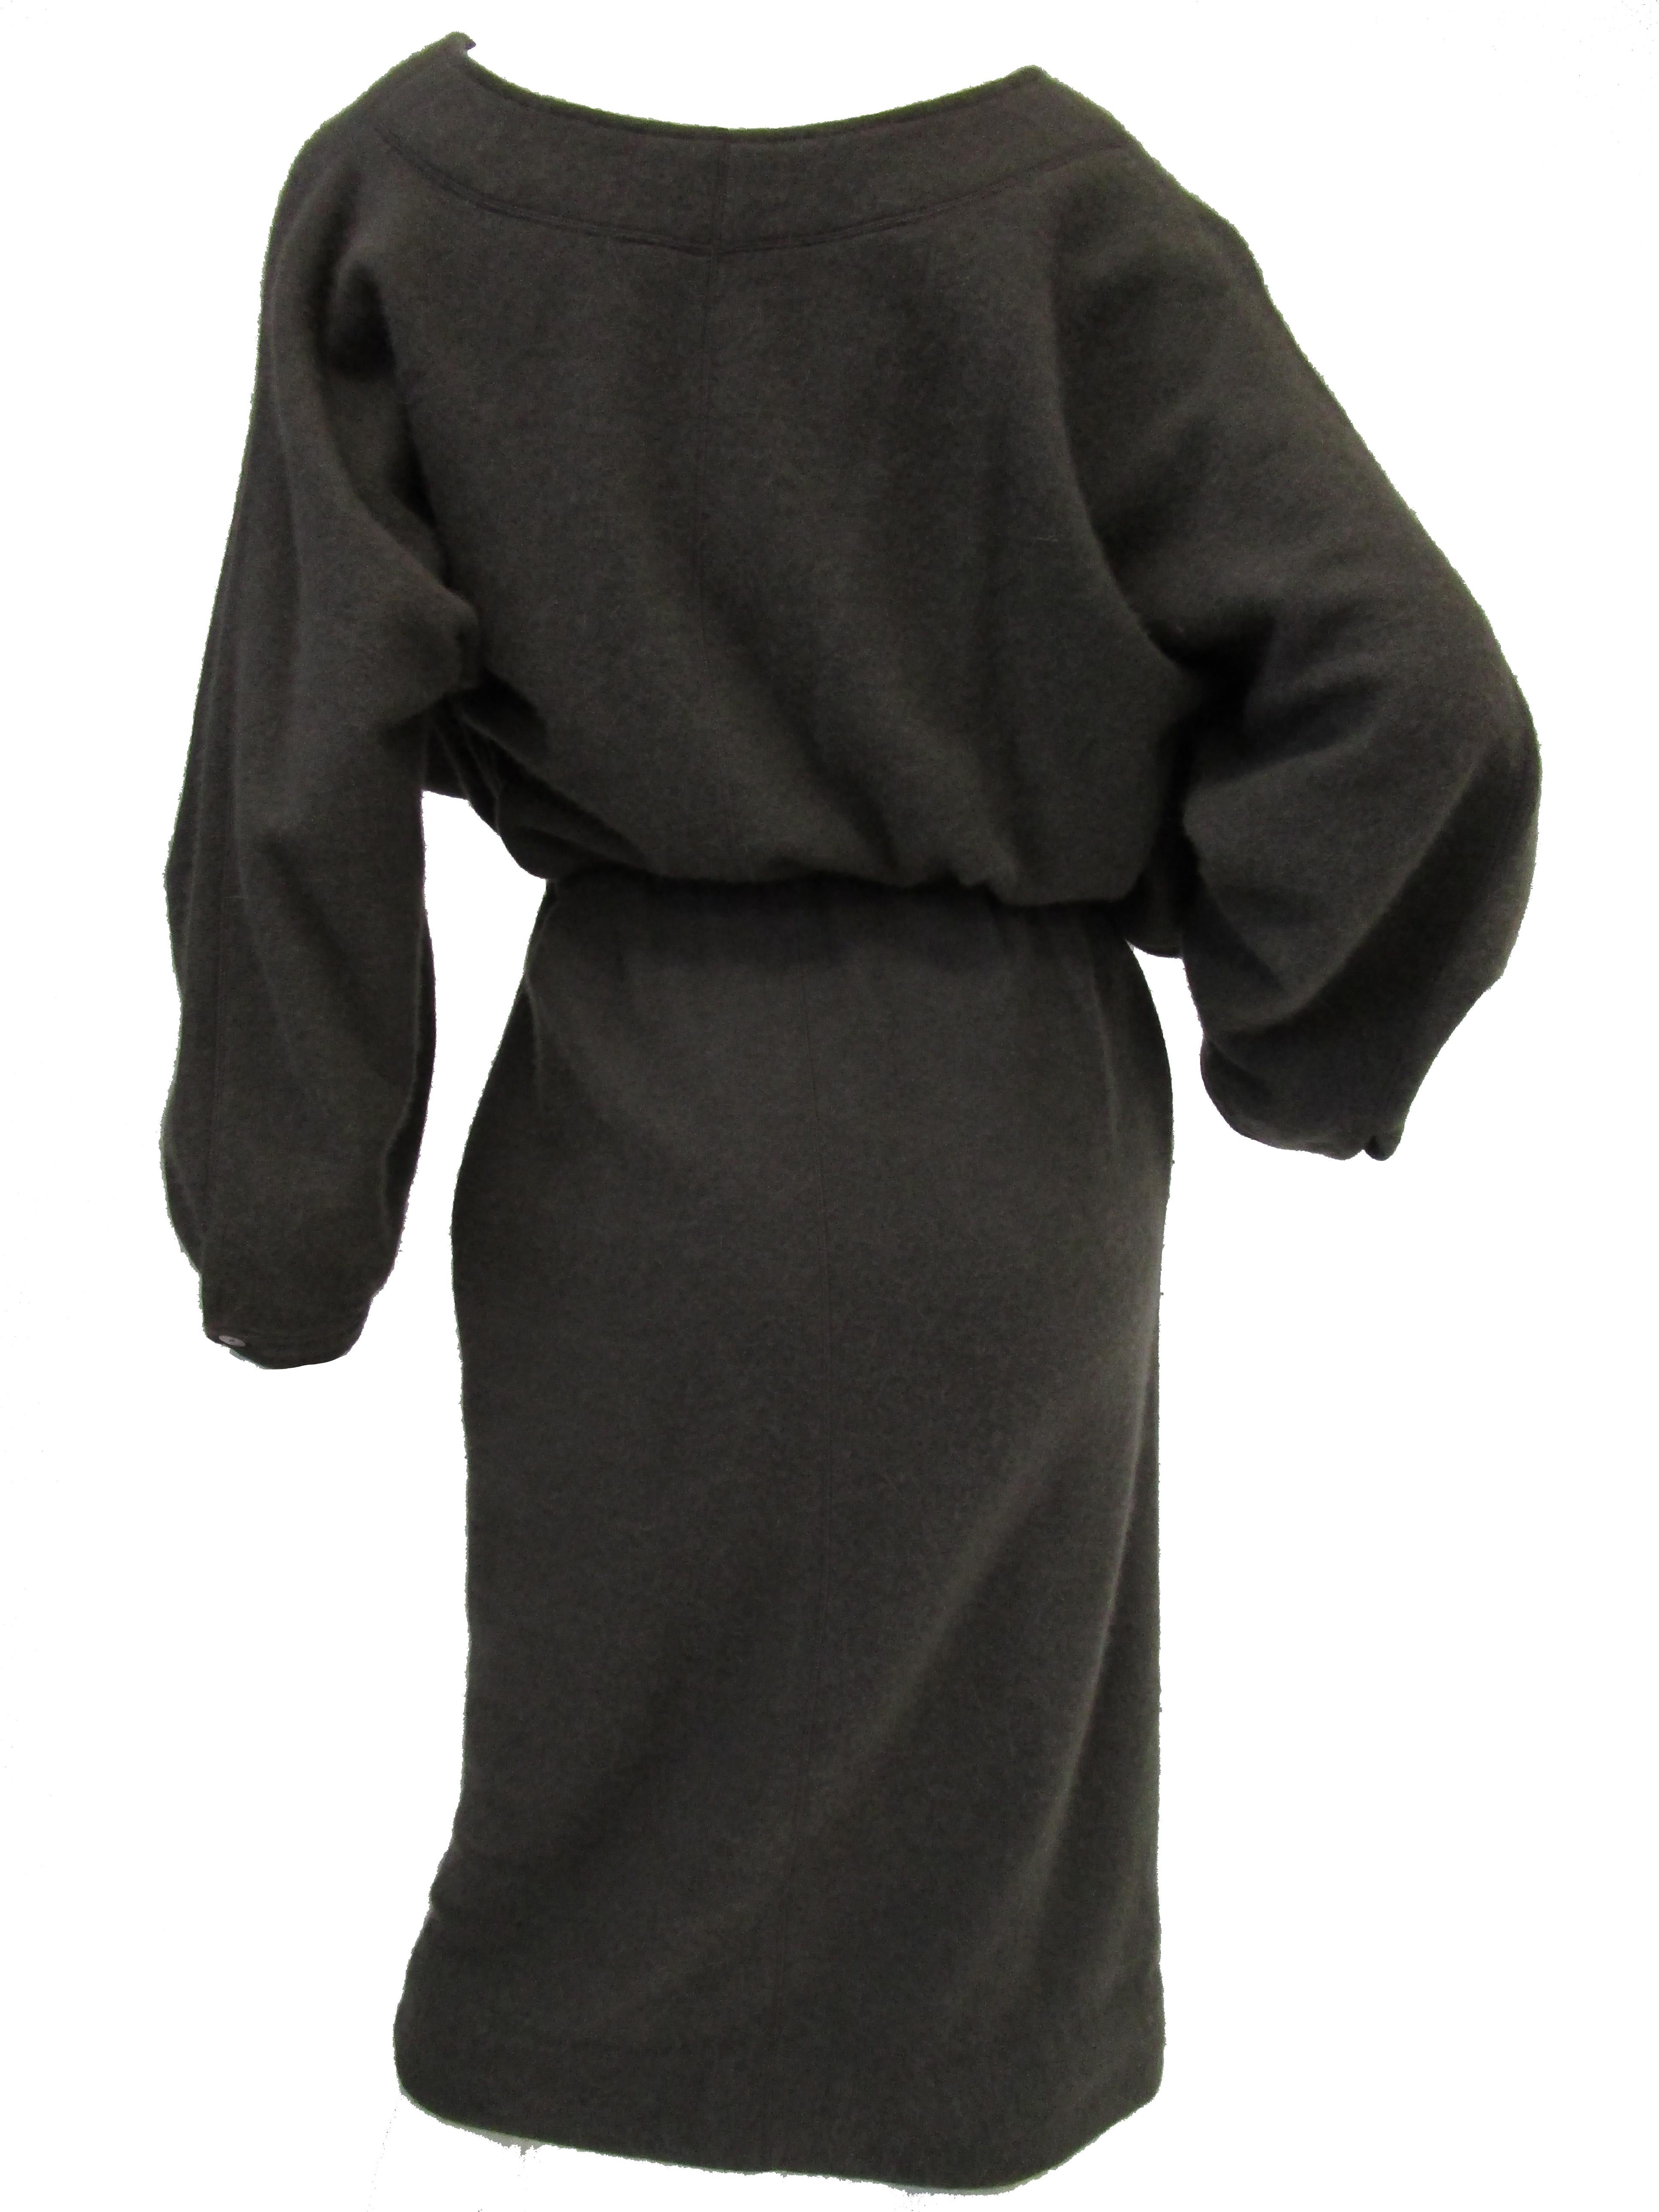 Women's 1990s Angora Blend Warm Grey Bat Wing Sweater Dress For Sale